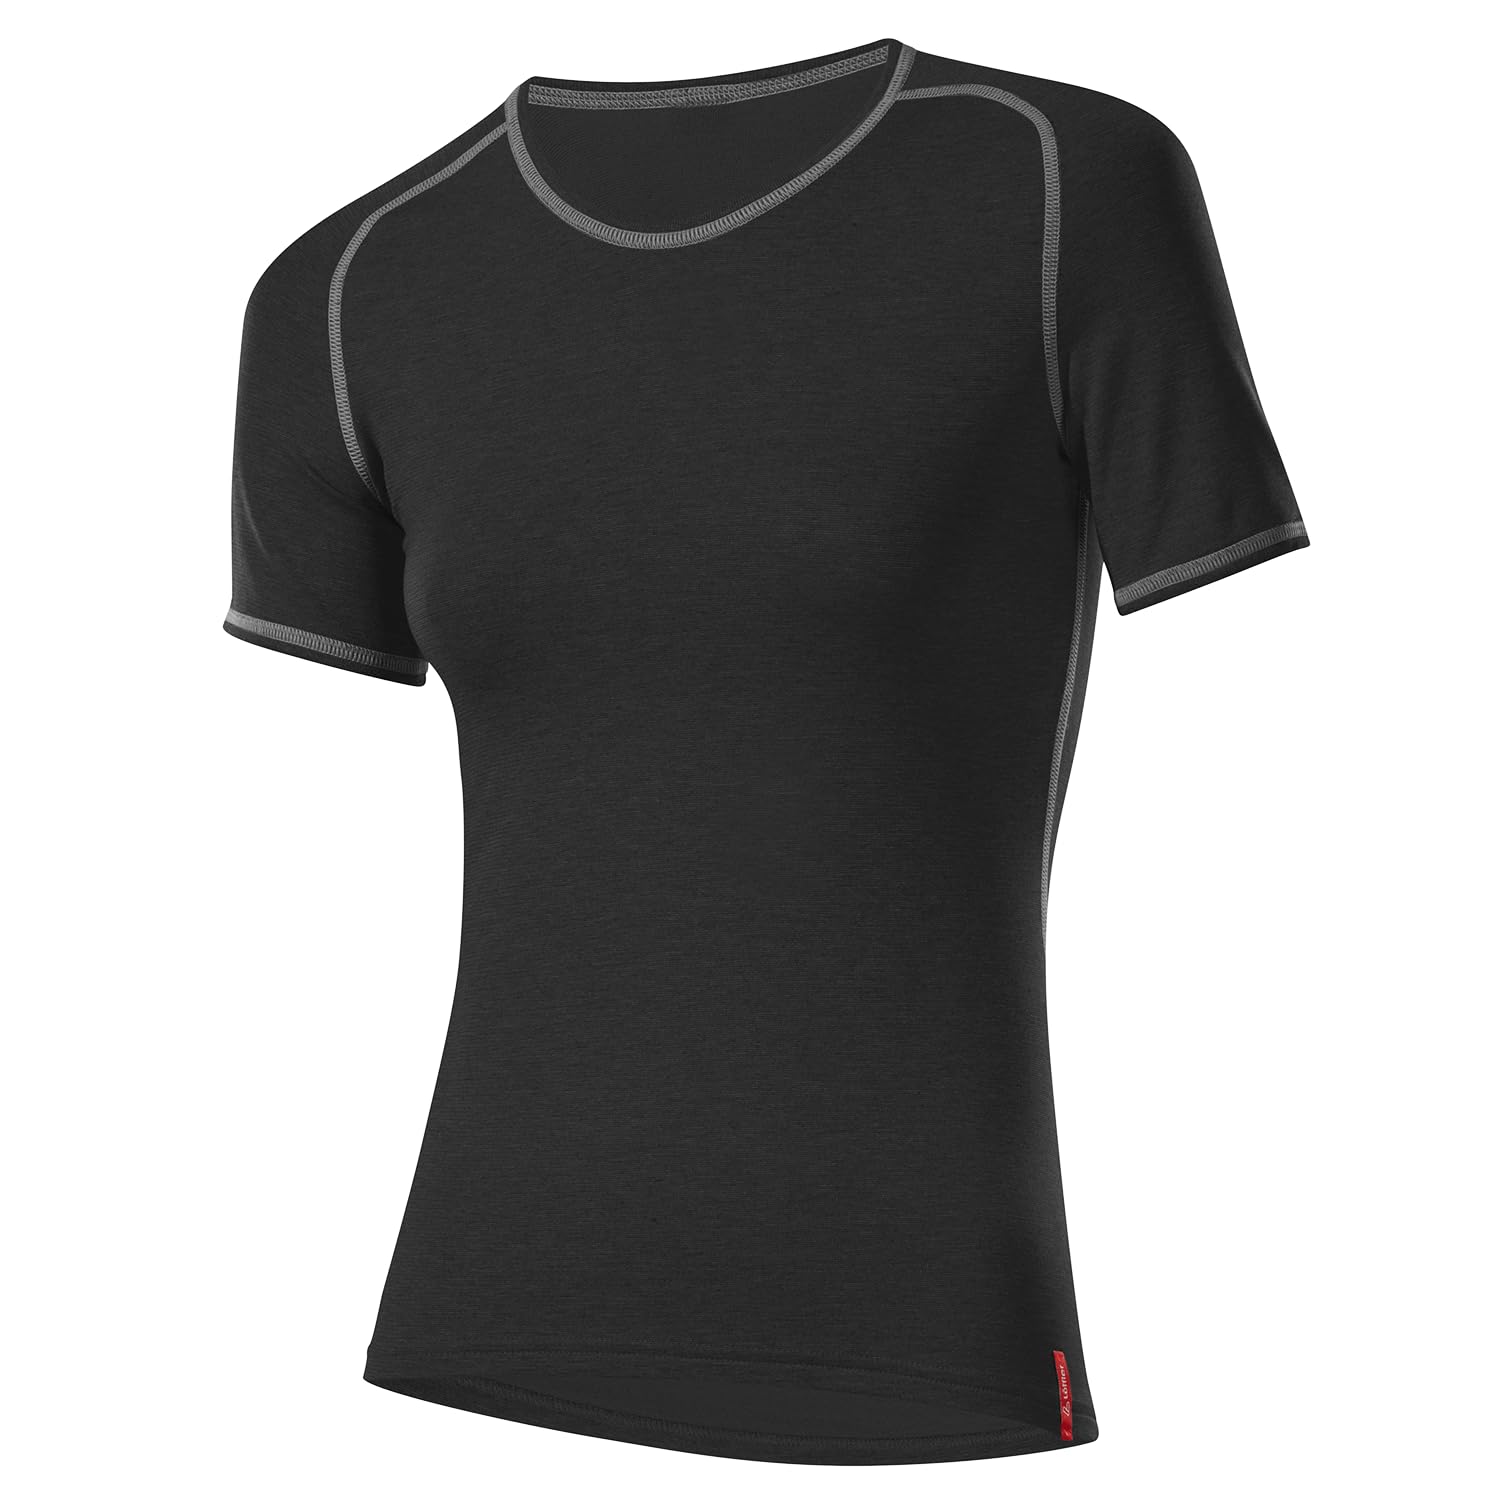 Löffler Damen Unterhemd Shirt Transtex Warm Ka, schwarz, 34